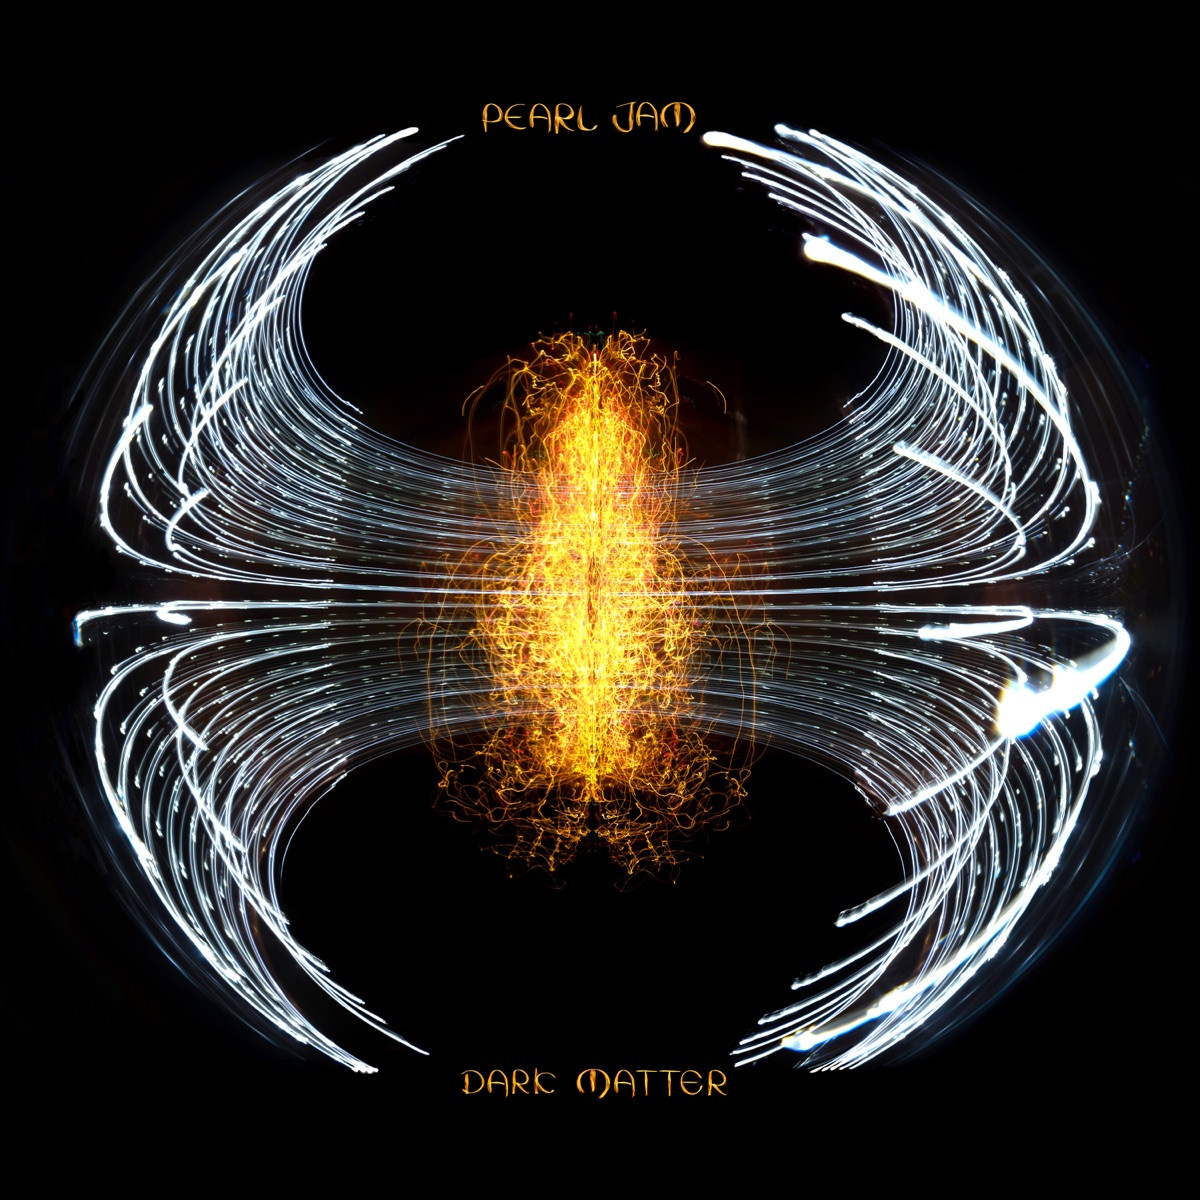 Pearl Jam - Dark Matter Album 1